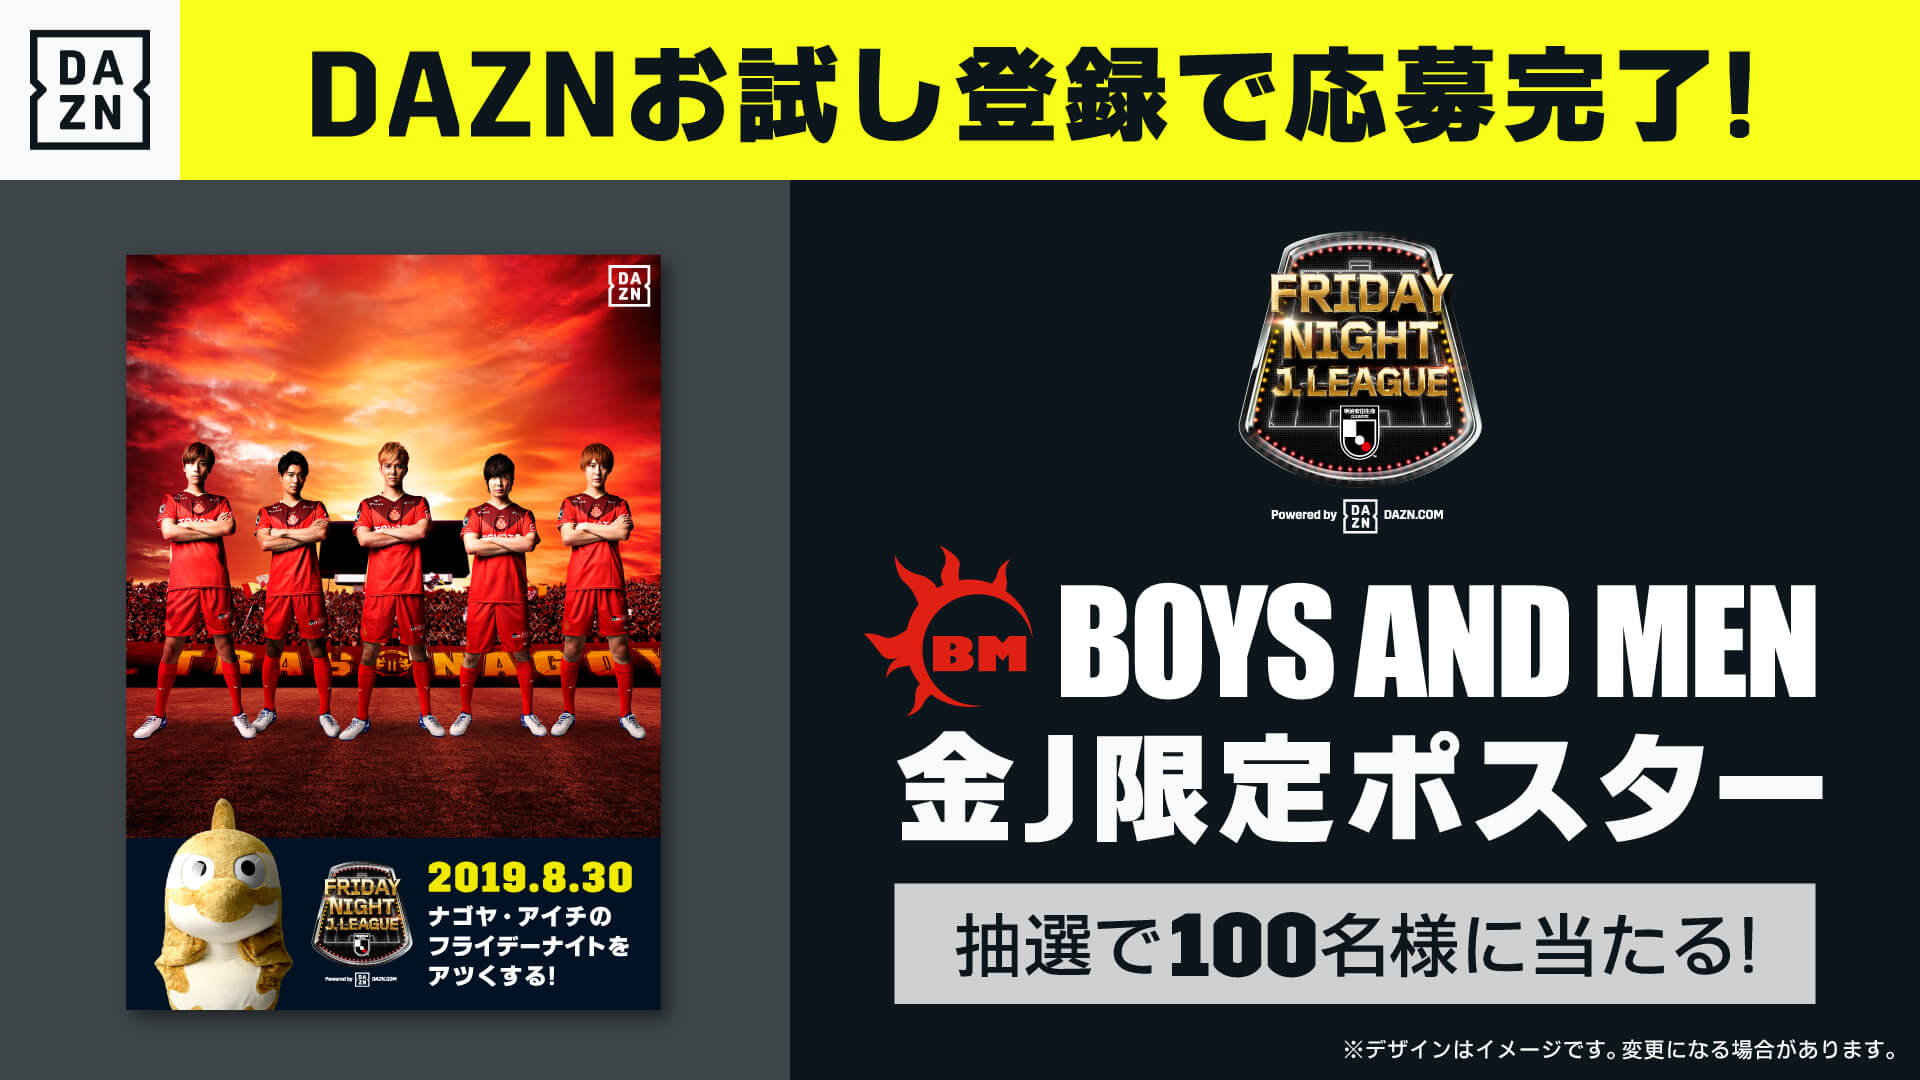 DAZN_FNJ_Nagoya_Boymen_poster_giveaway_0820.jpg